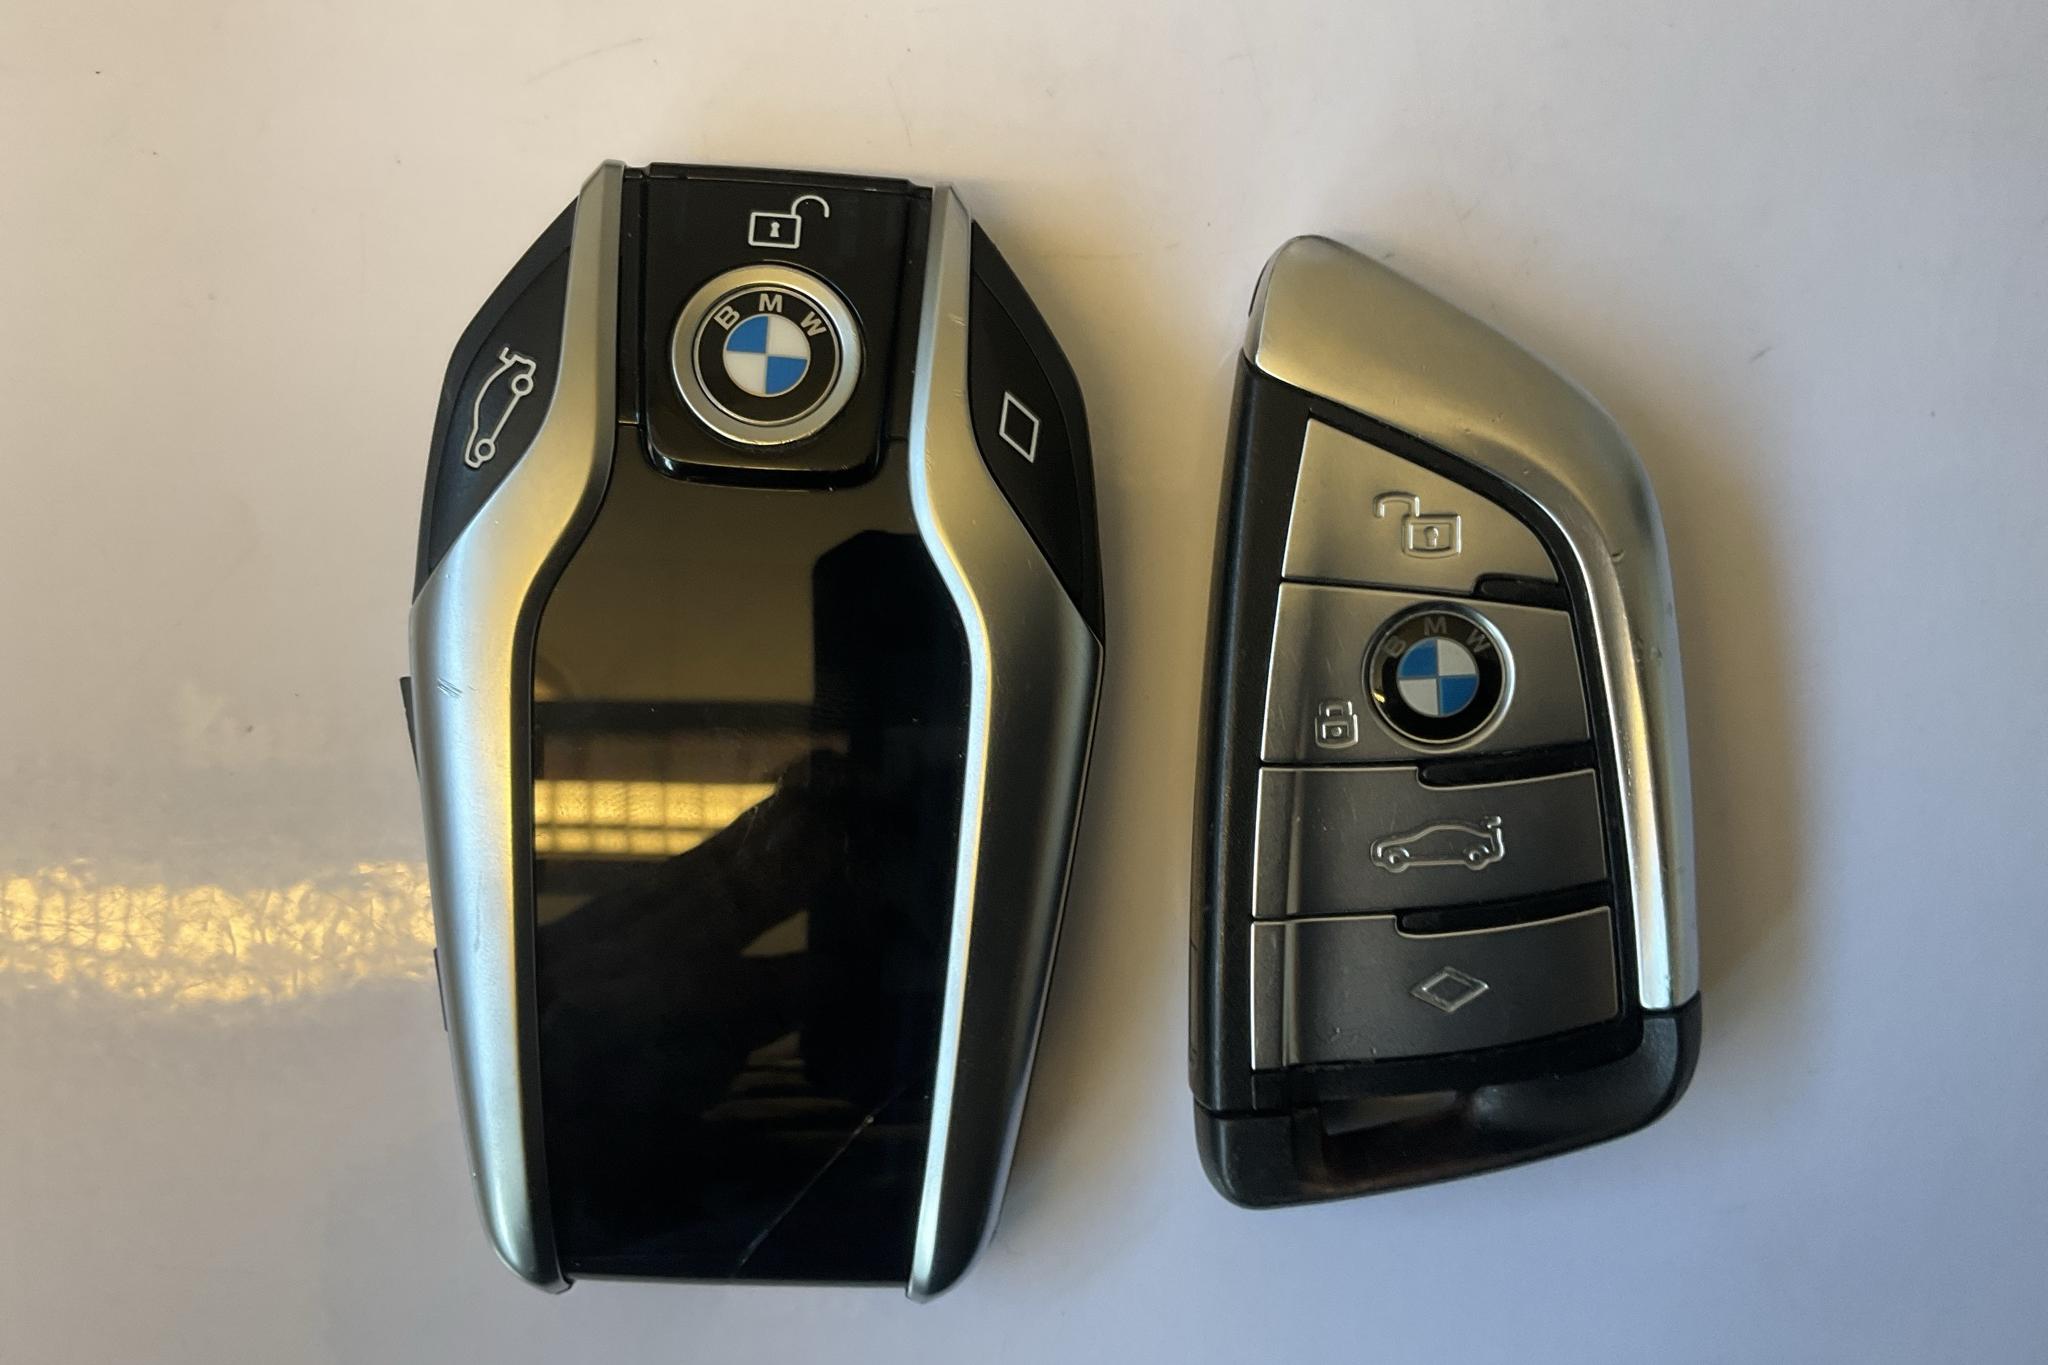 BMW X5 xDrive40i, G05 (340hk) - 74 070 km - Automatic - black - 2019